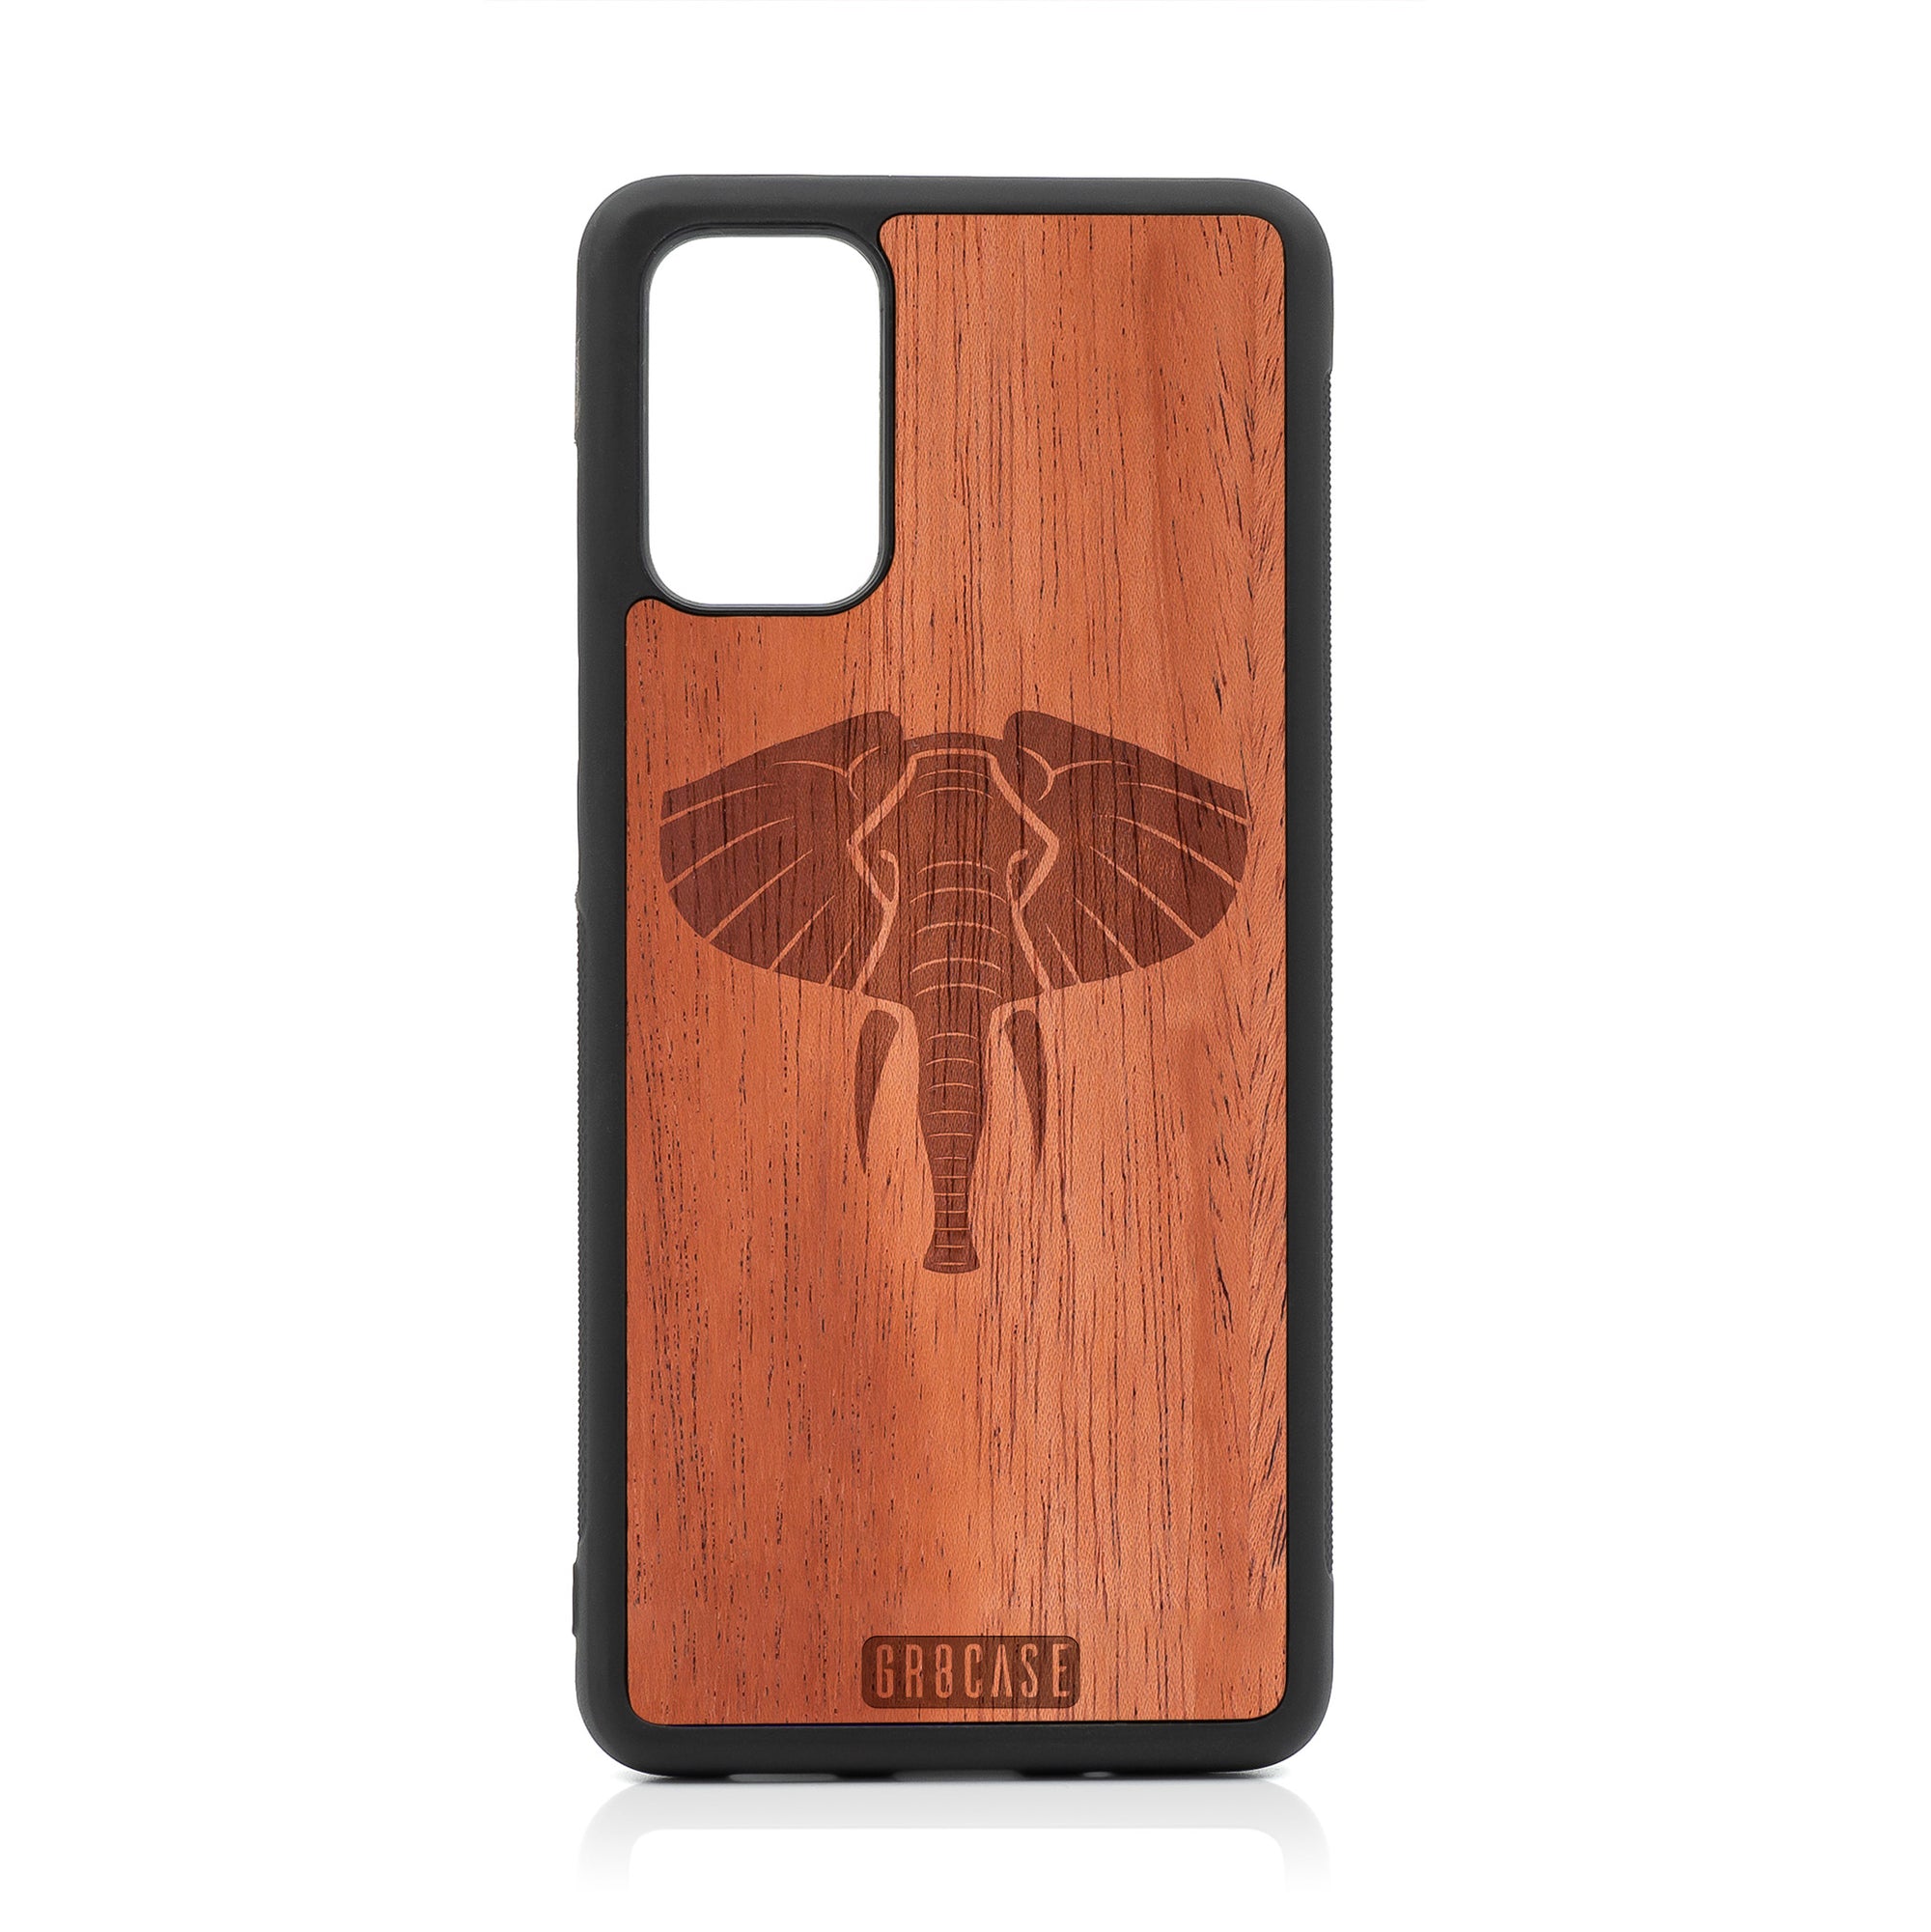 Elaphant Design Wood Case For Samsung Galaxy S20 Plus by GR8CASE